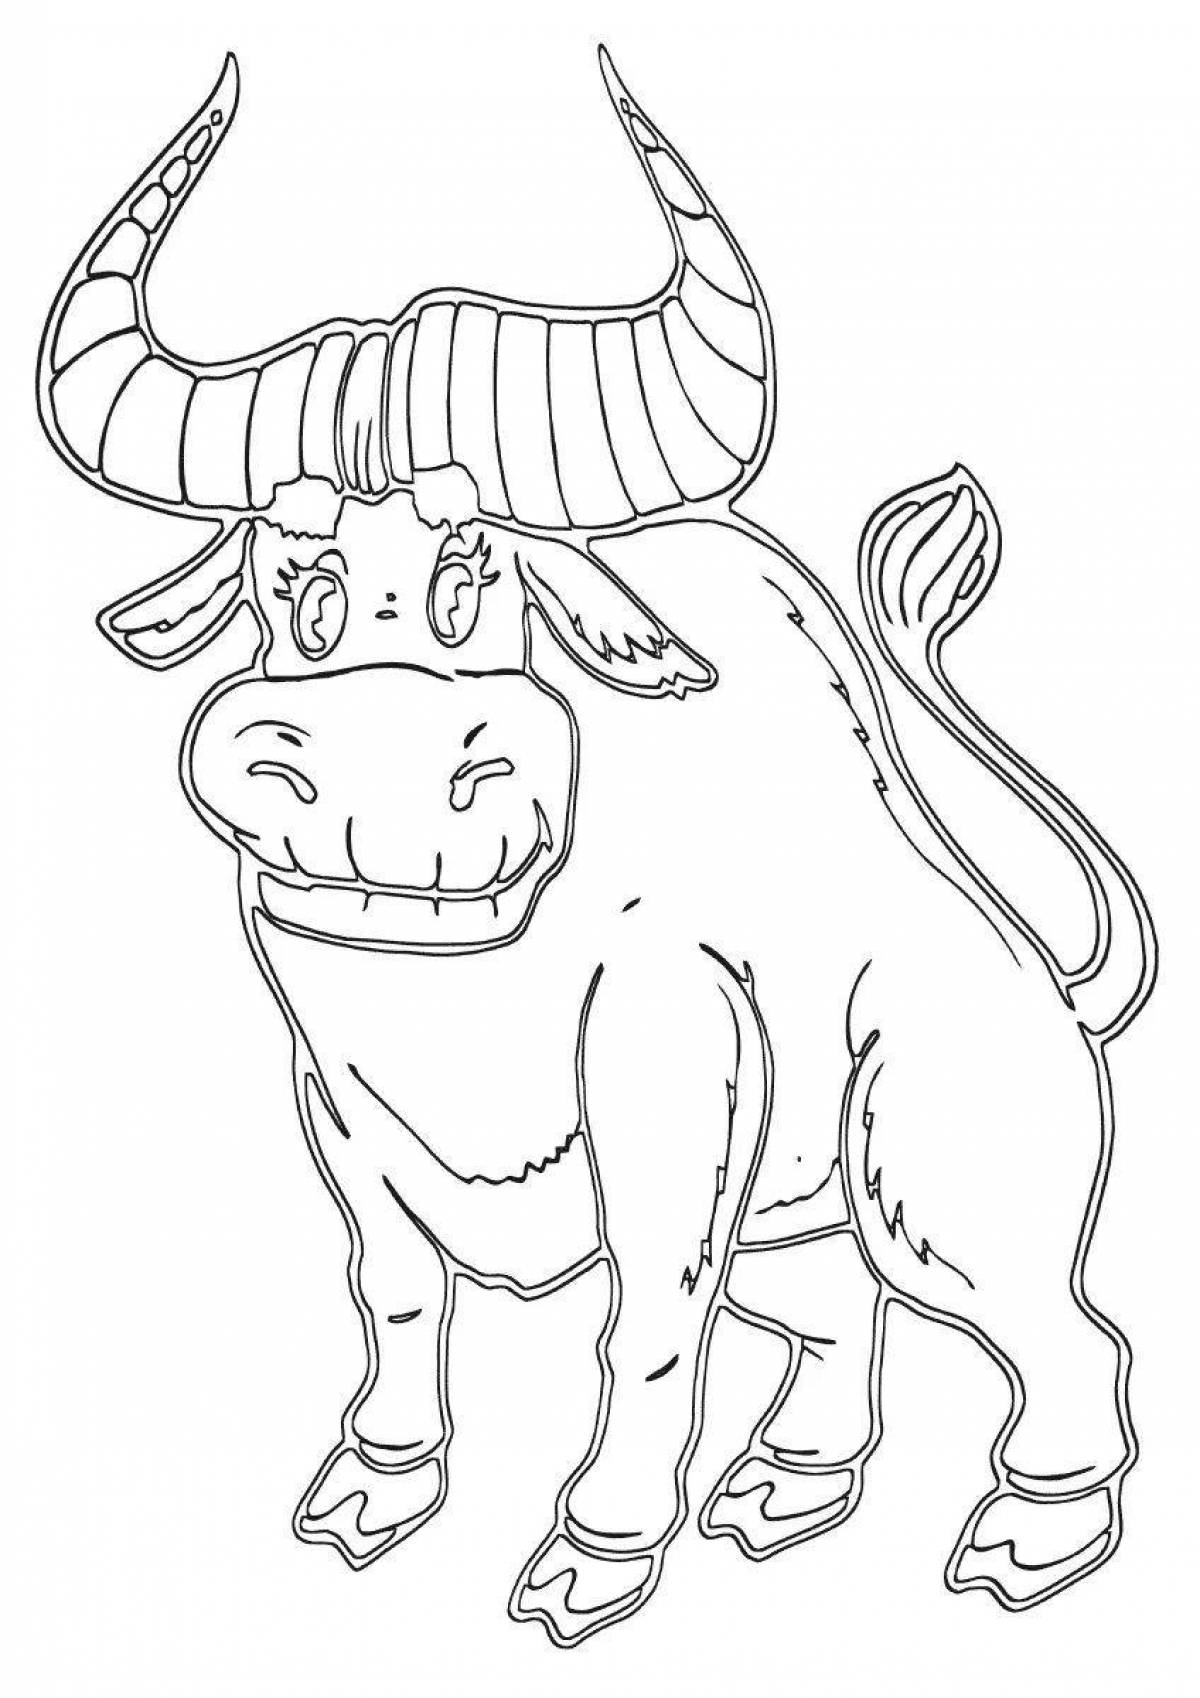 Generous buffalo coloring page